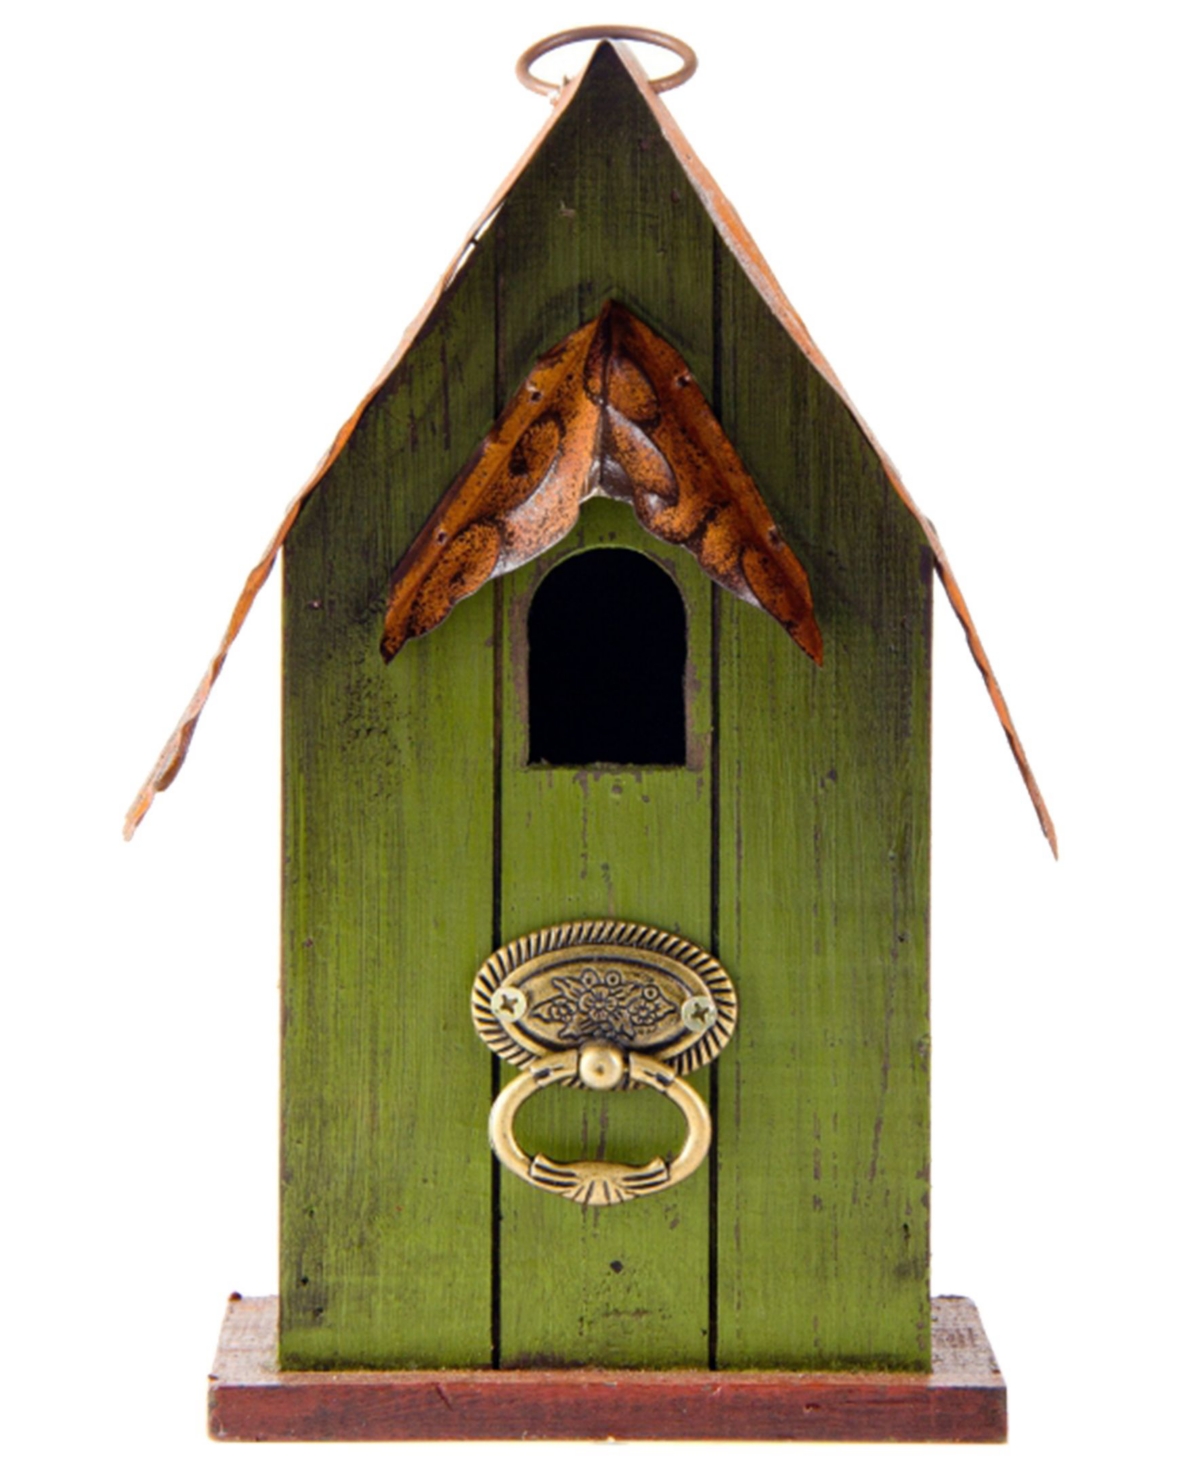 Rustic Garden Distressed Solid Wood Decorative Bird House - Green